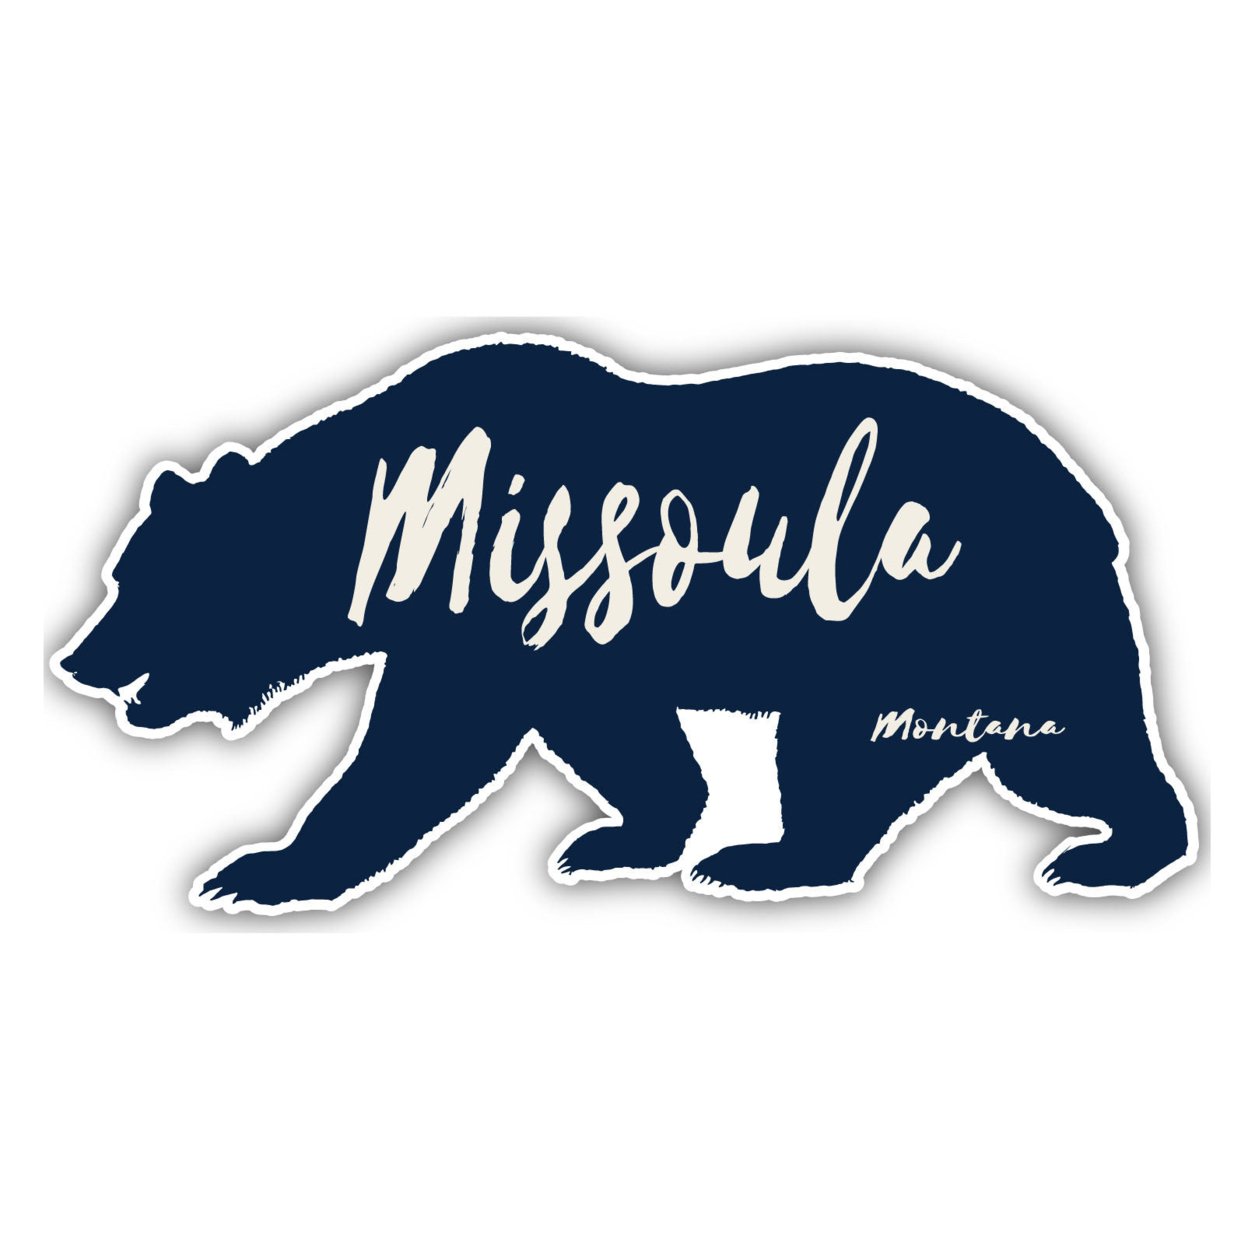 Missoula Montana Souvenir Decorative Stickers (Choose Theme And Size) - 4-Inch, Camp Life